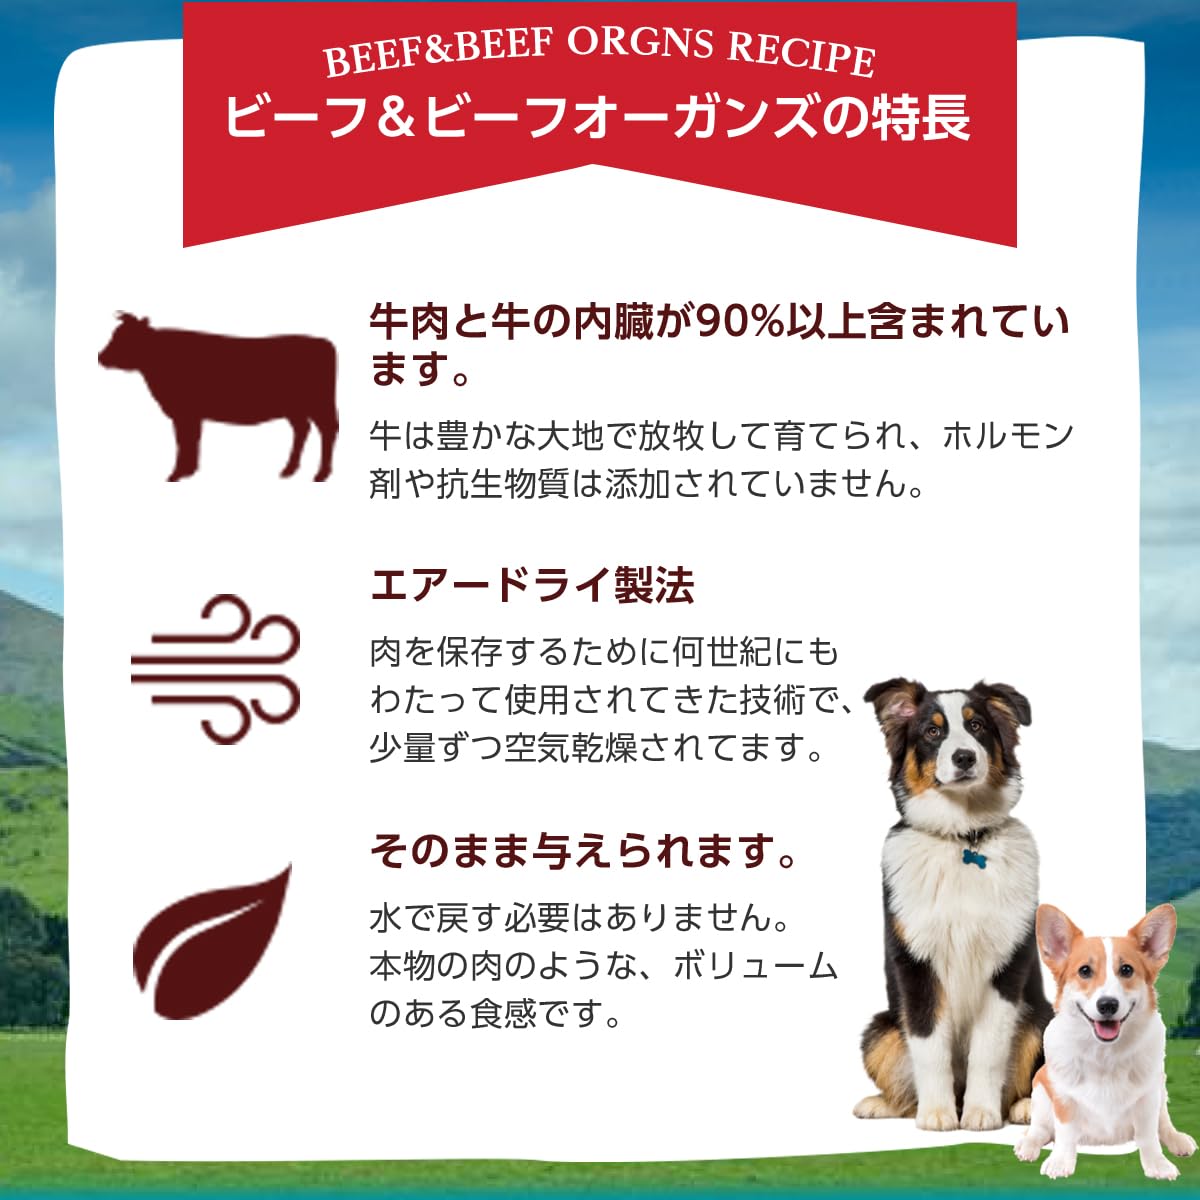 Grandma Mae's Country Naturals RawTernative Air Dried Dog Food 1 LB Beef and ...